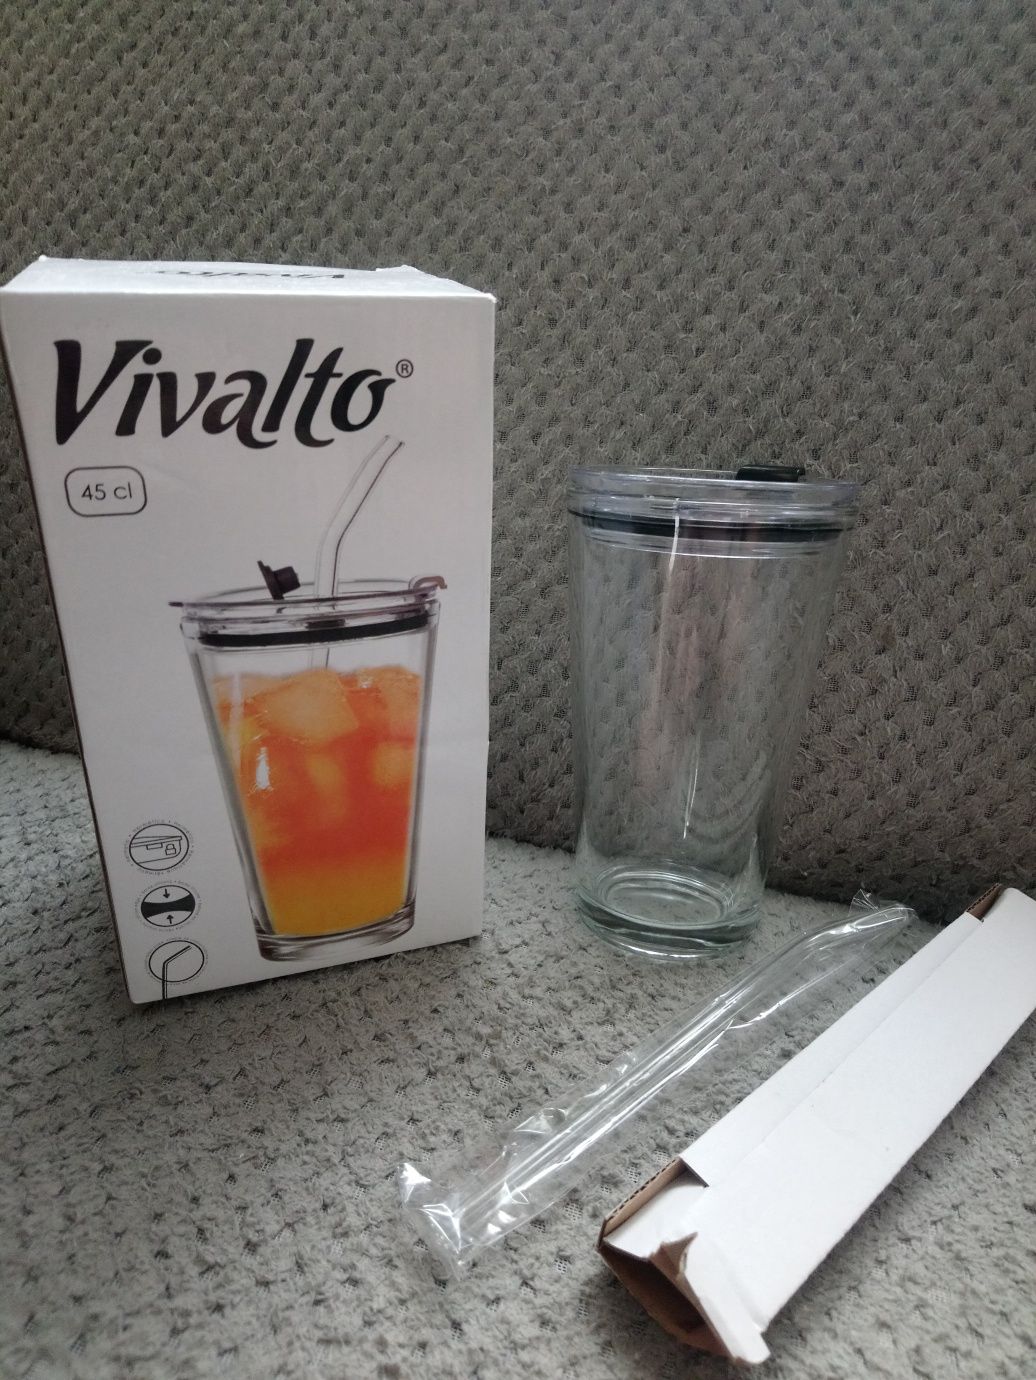 Szklany pojemnik ze słomką Vivalto